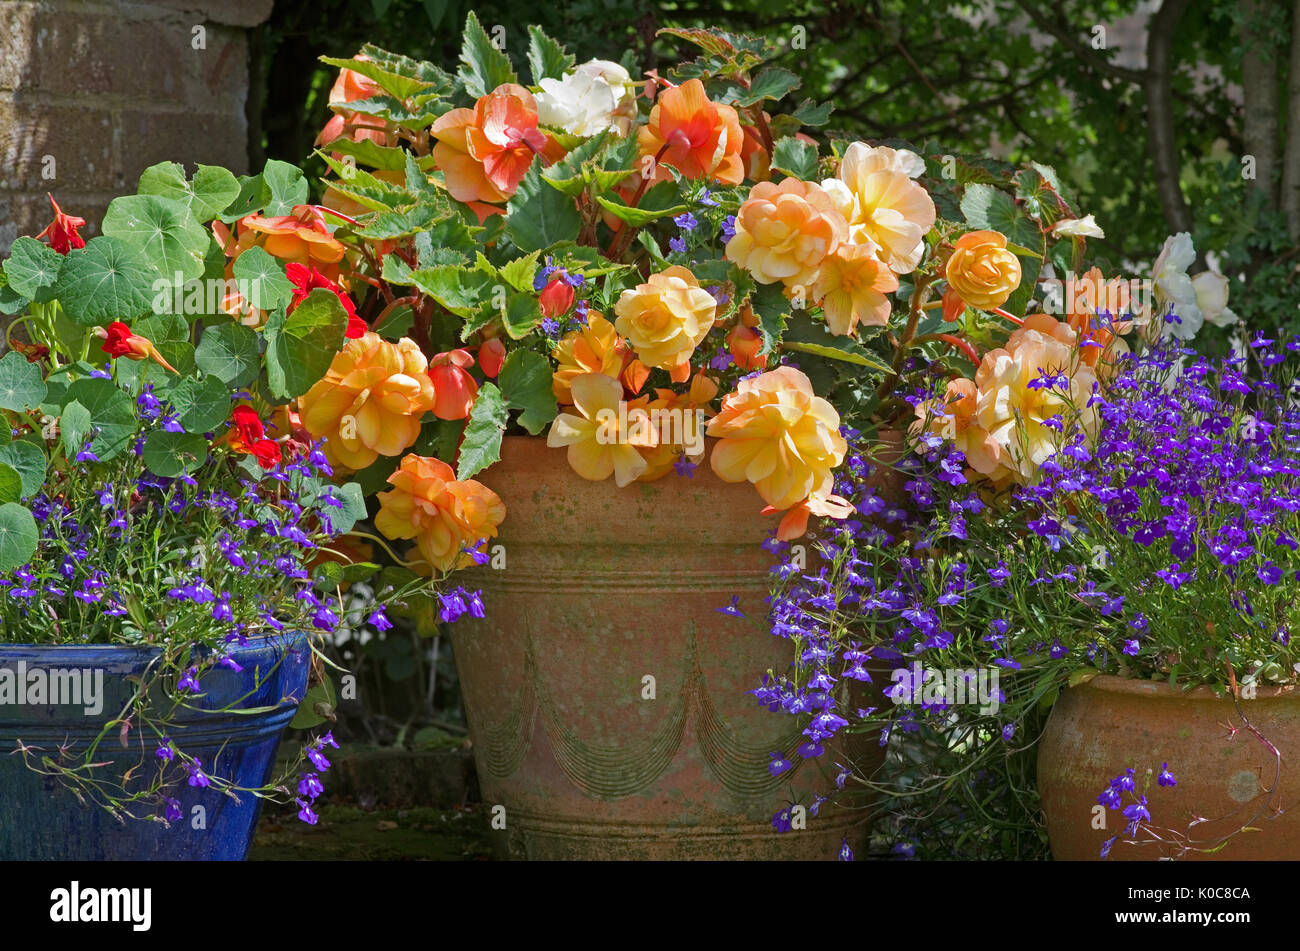 Summer flowers - informal arrangement of trailing begonias, lobelias and nasturtiums in weathered pots, in the corner of an English  garden Stock Photo